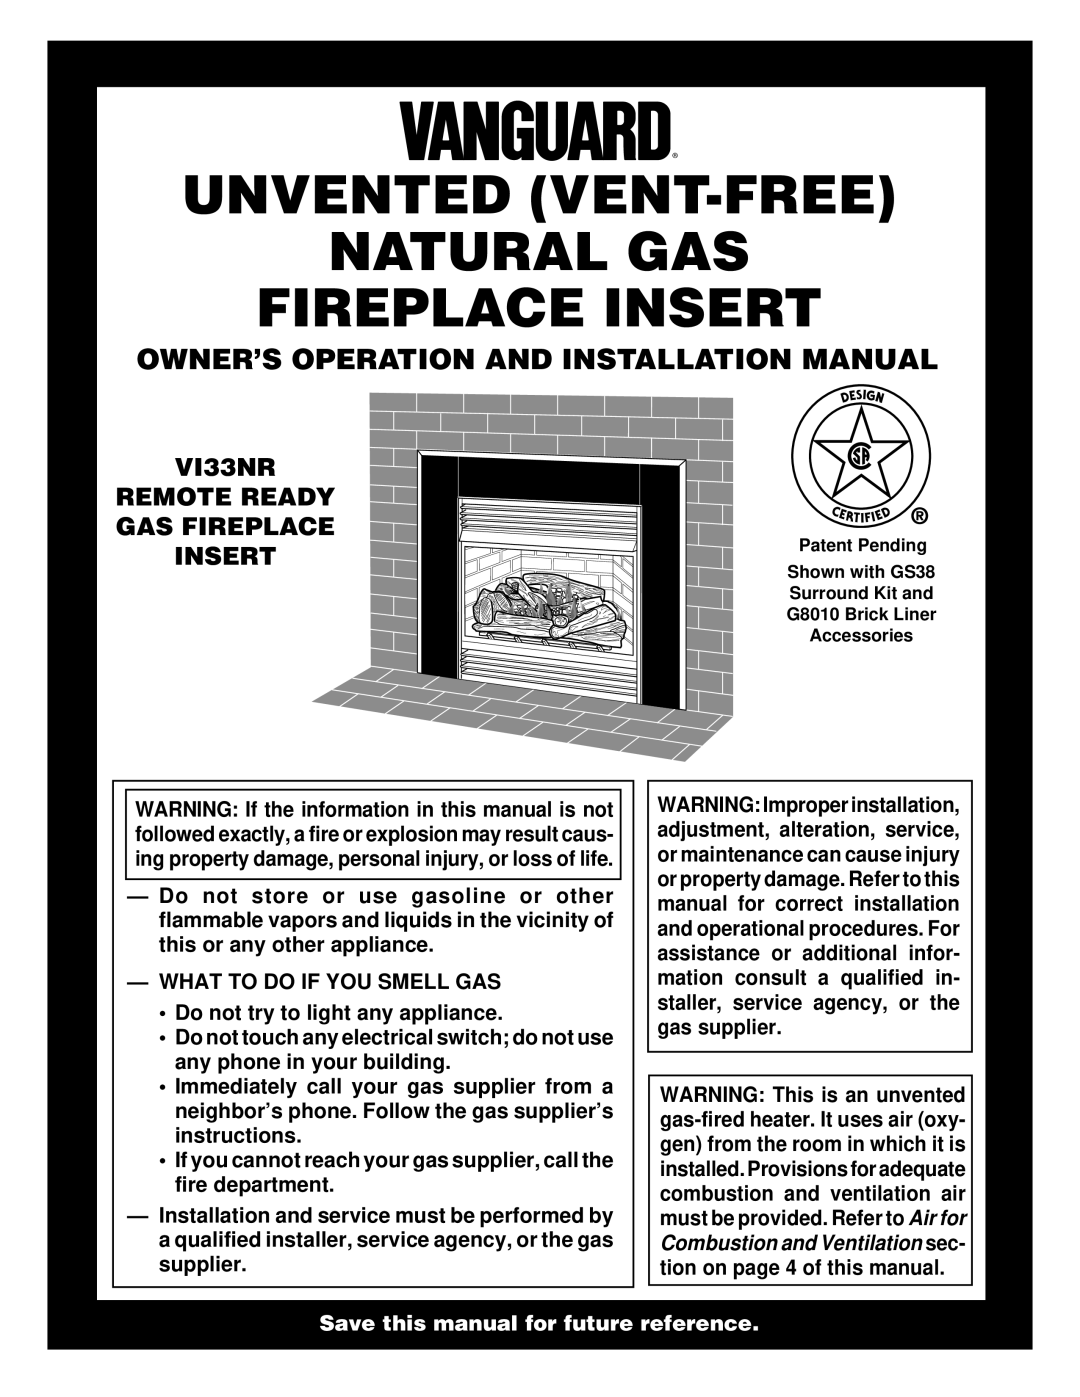 Desa VI33NR installation manual Owner’S Operation And Installation Manual, Unvented Vent-Free Natural Gas Fireplace Insert 